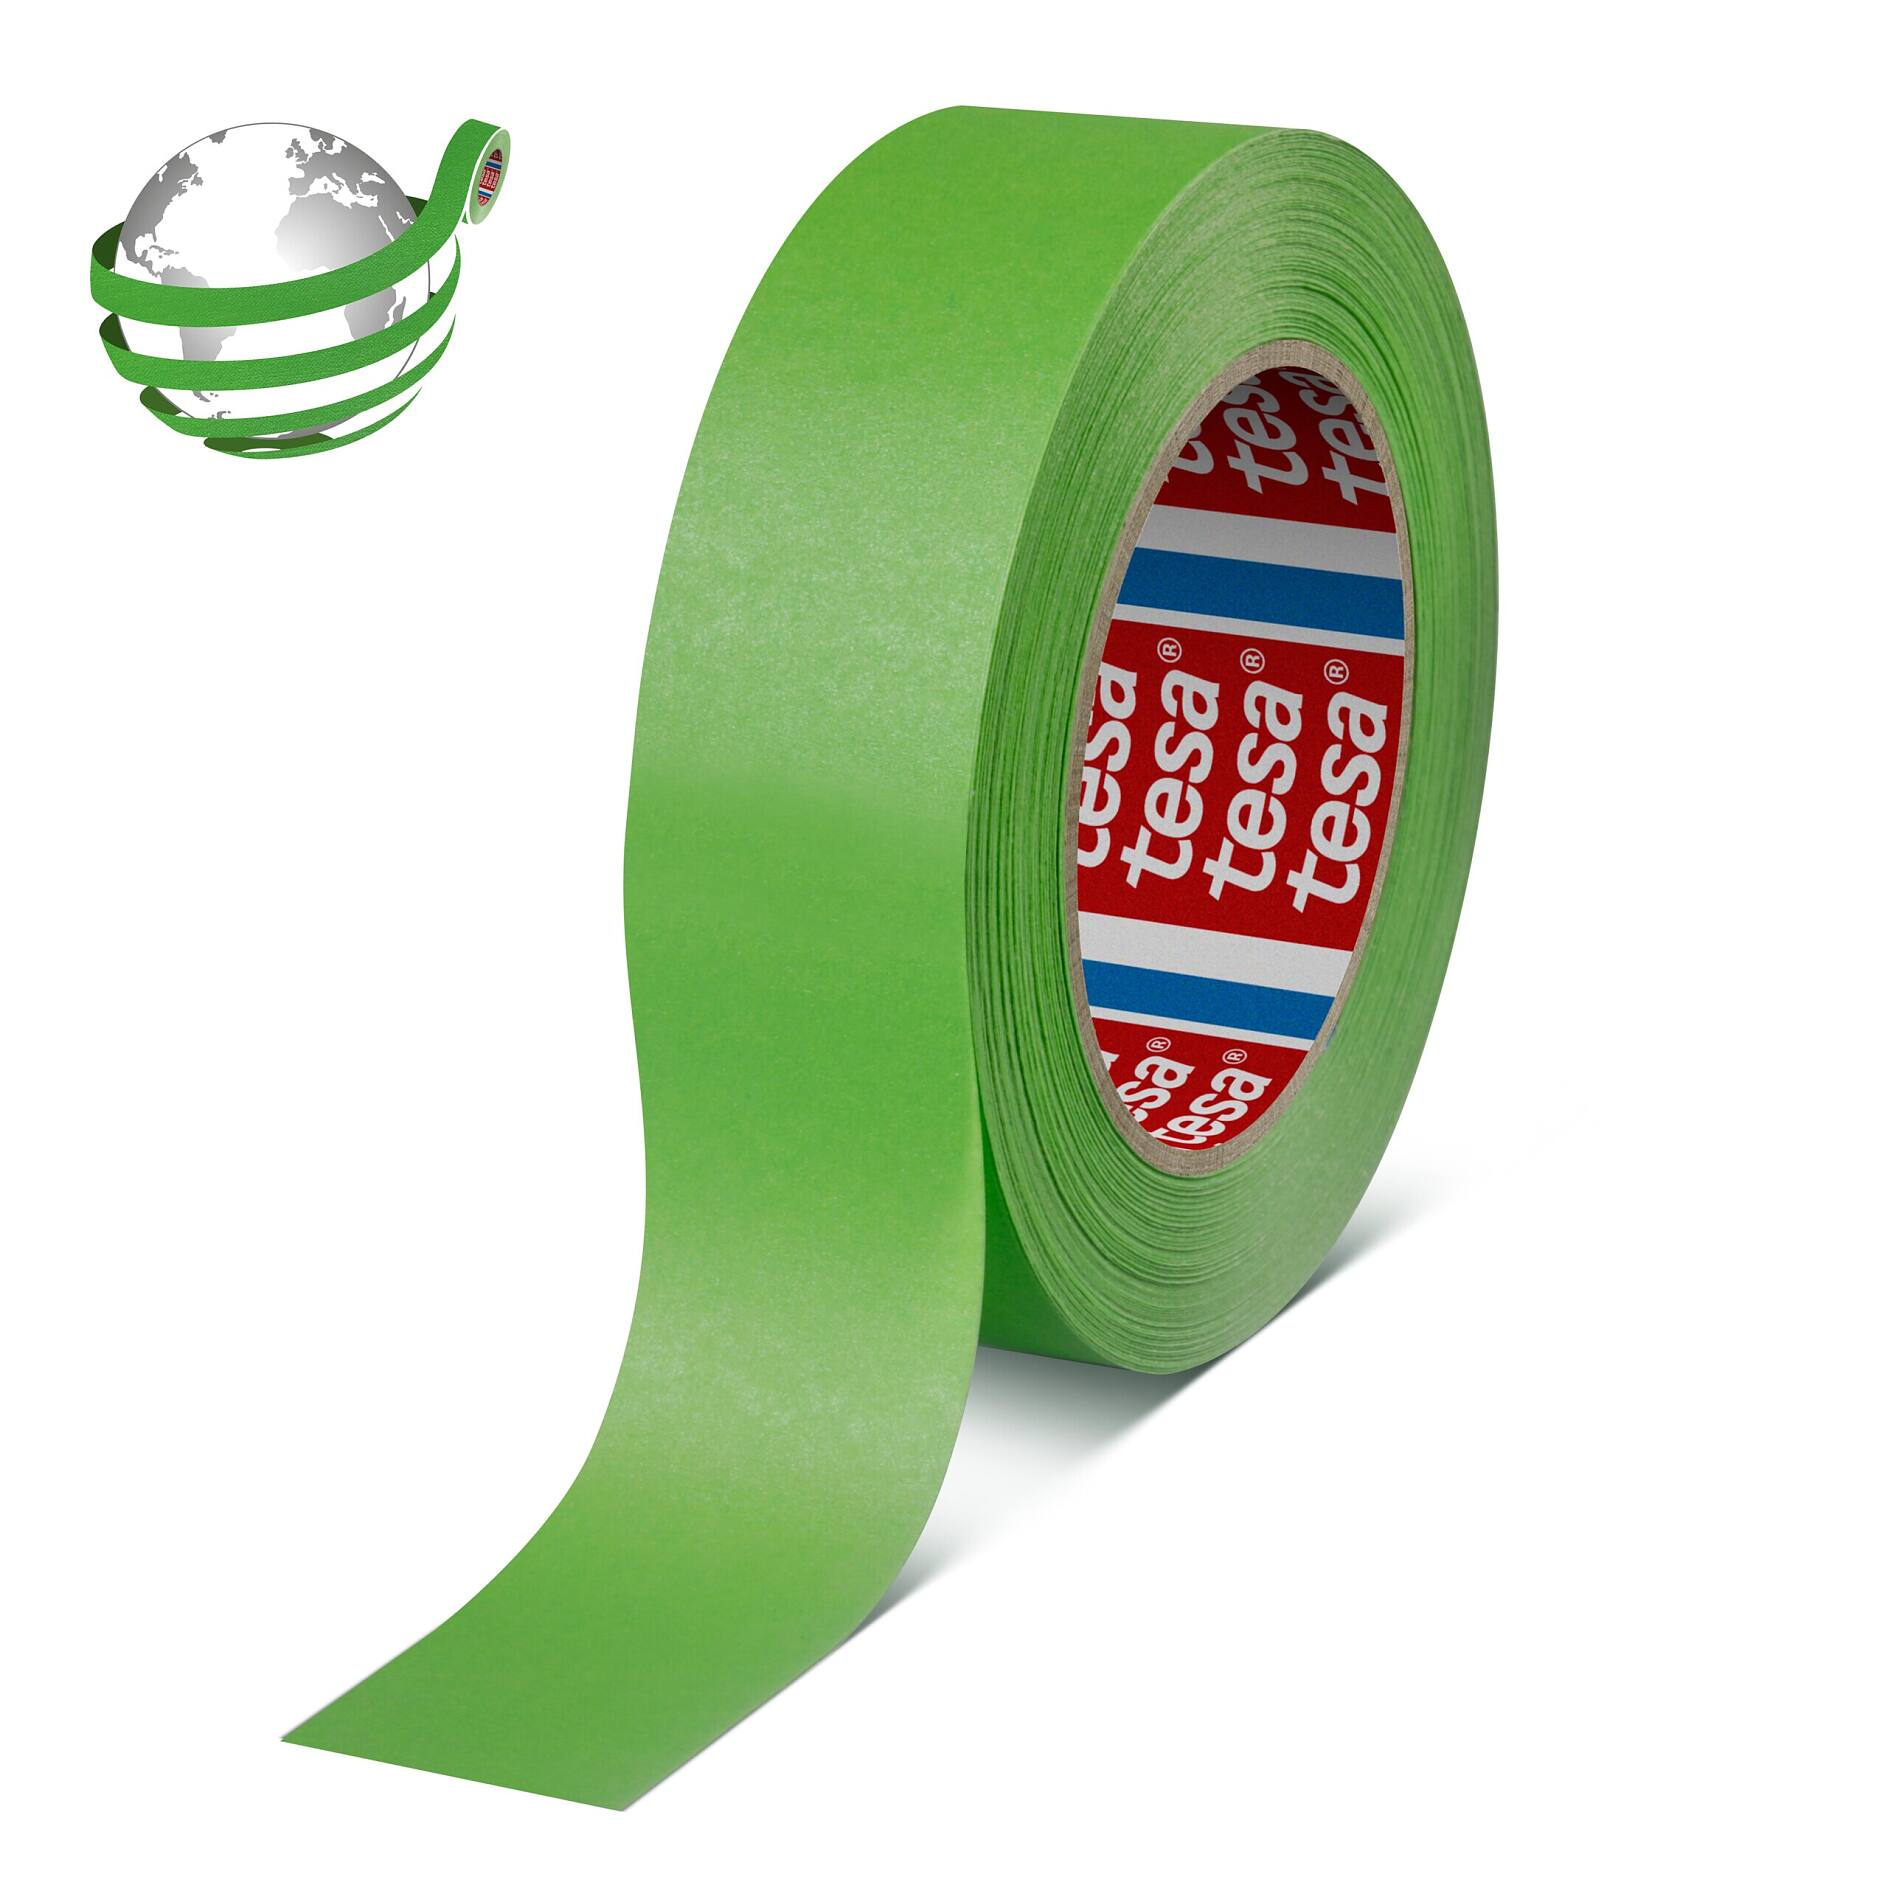 tesa® Professional 4325 Masking Tape Pro White - tesa